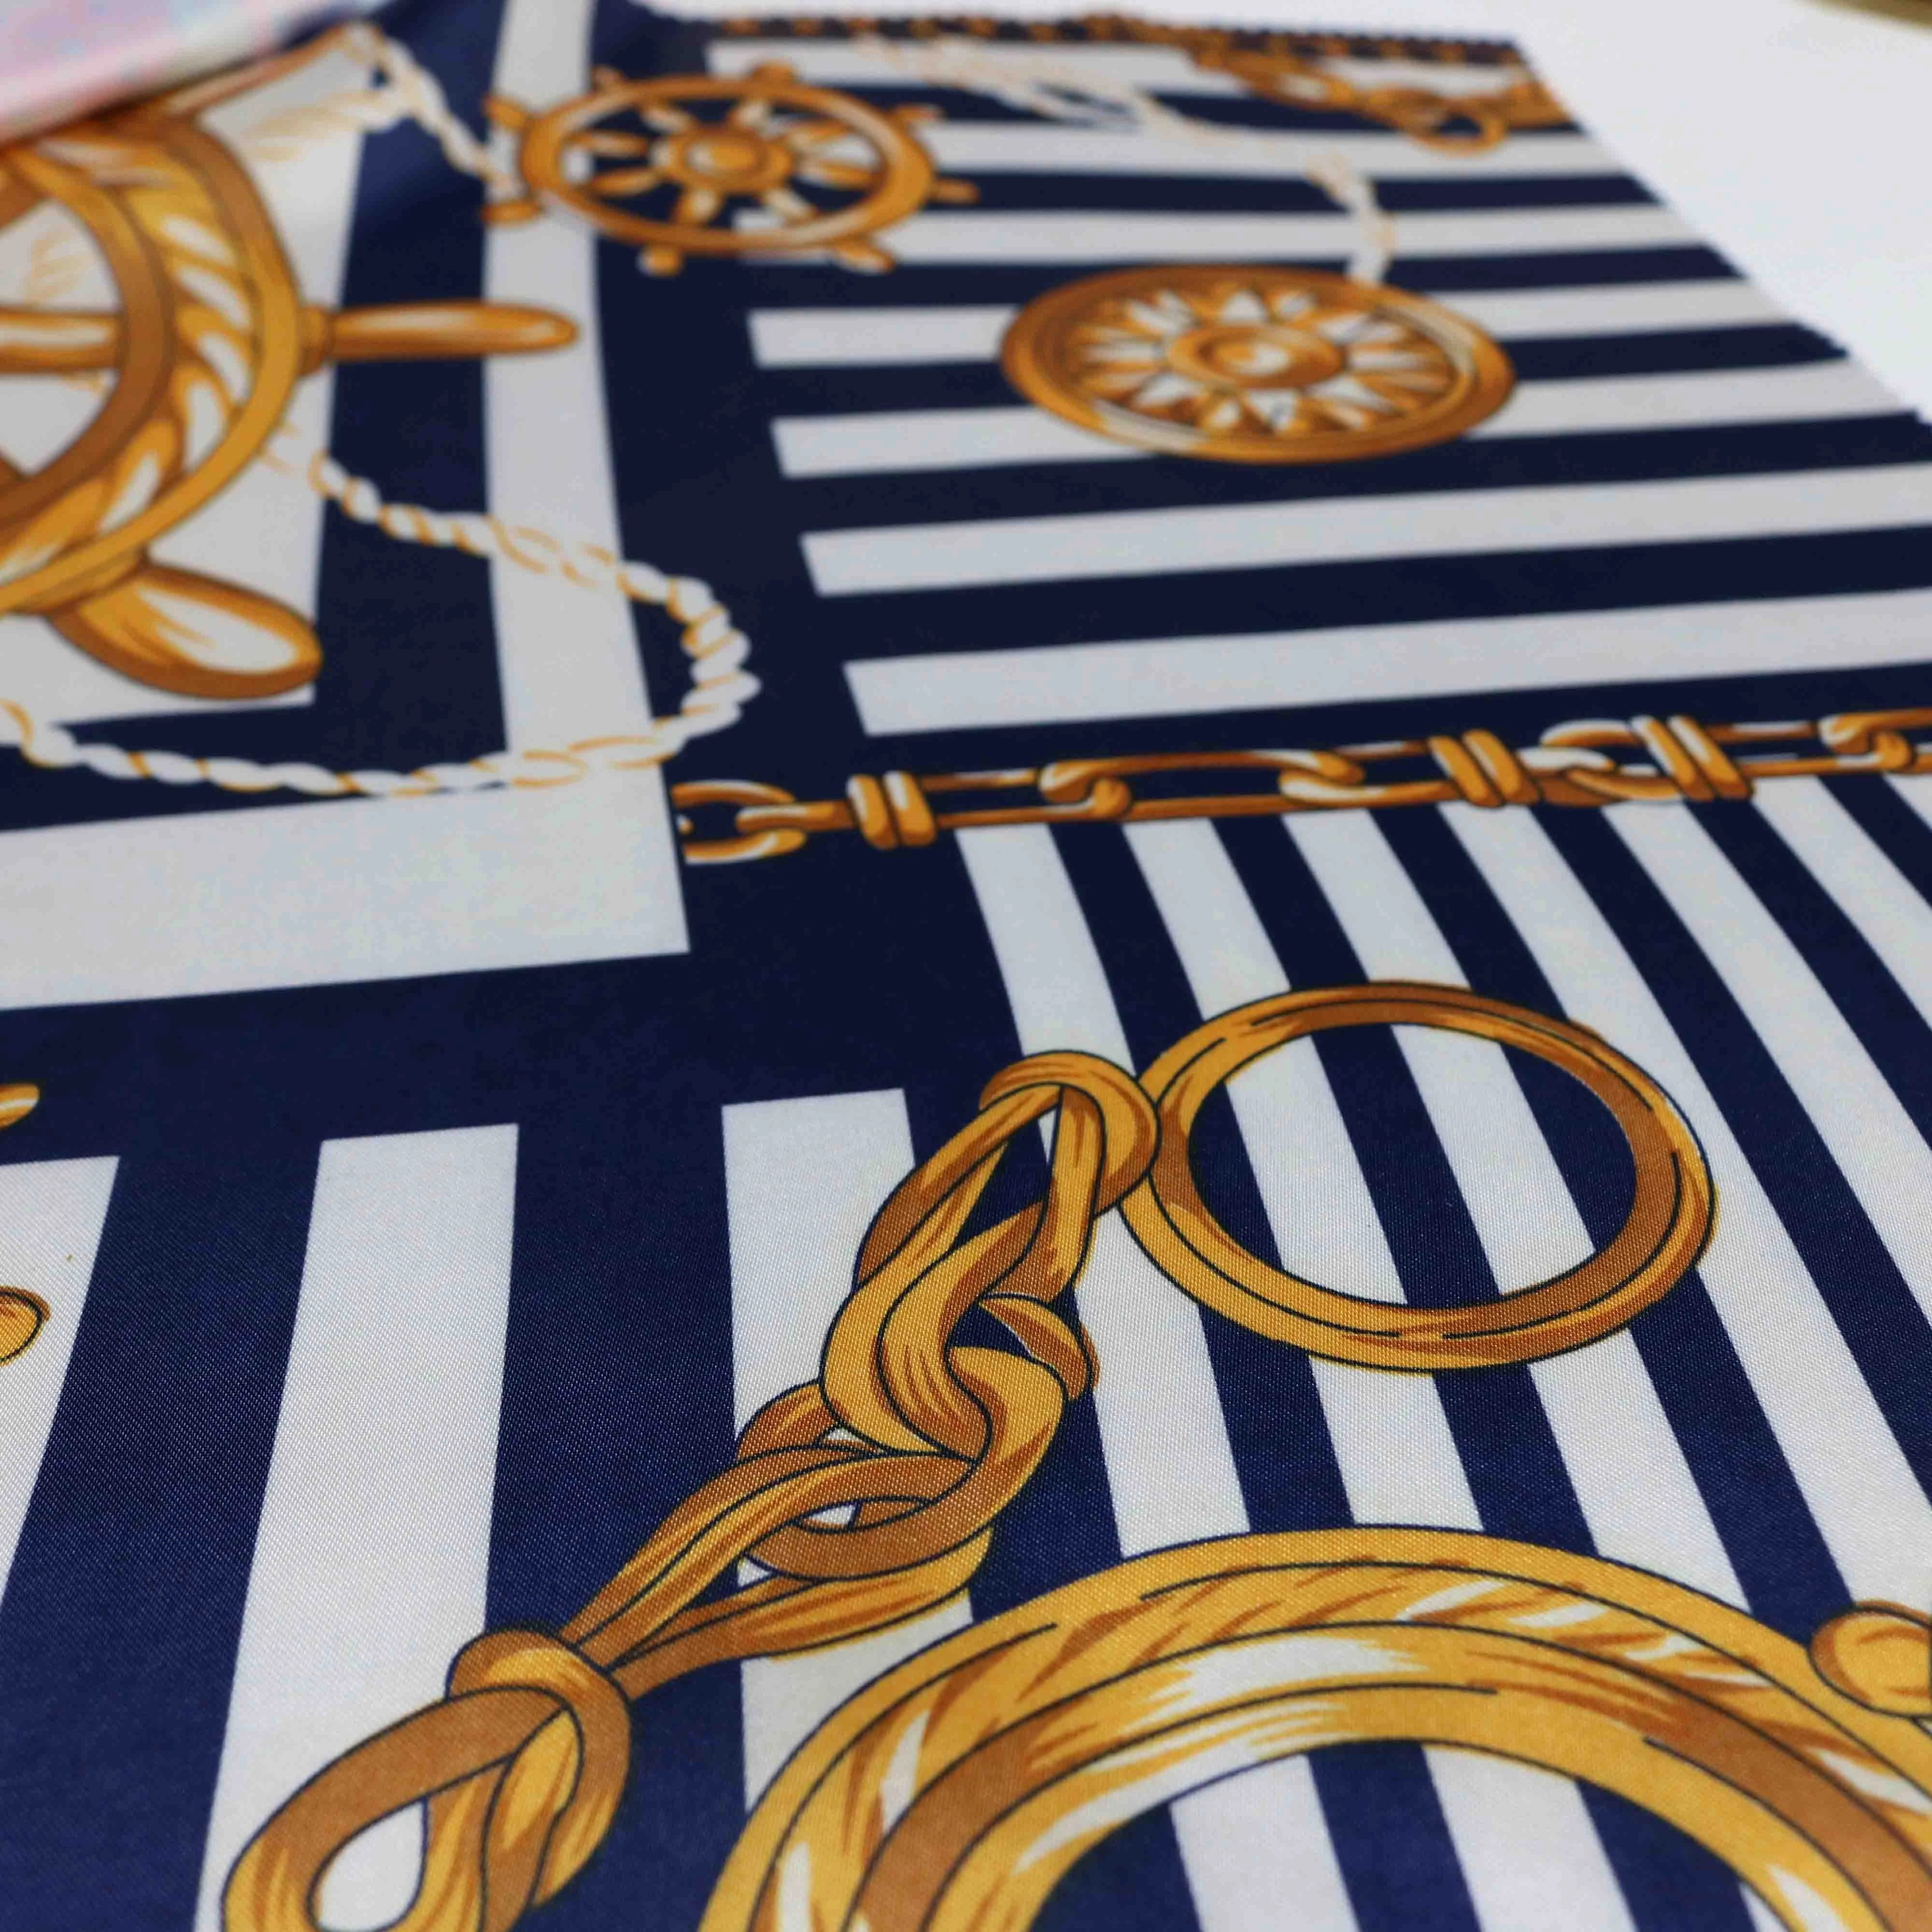 Shaoxing textiles woven rayon jacquard Stretch satin lining fabric